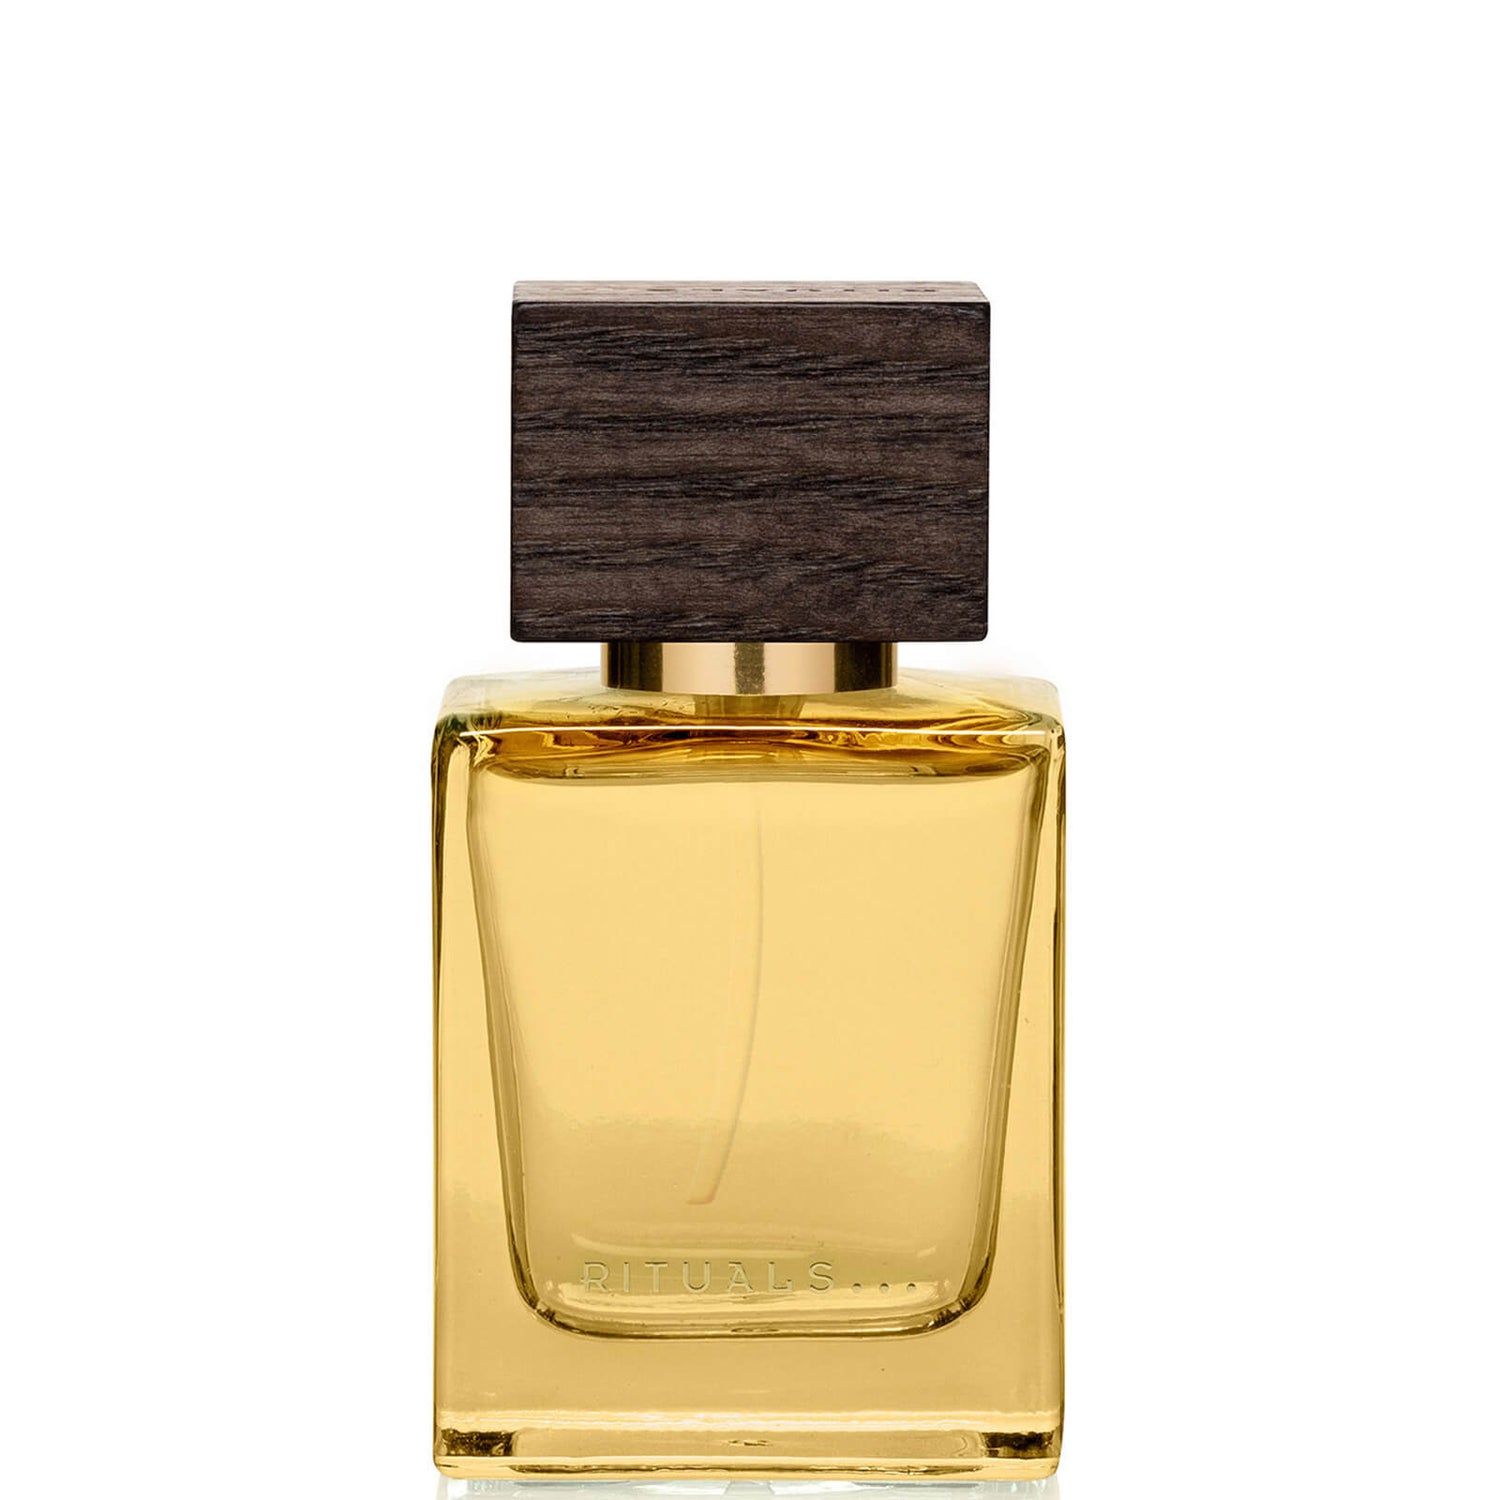 RITUALS Oriental Essences Travel Perfume Maharaja d’Or, eau de parfum i reisestørrelse 15 ml